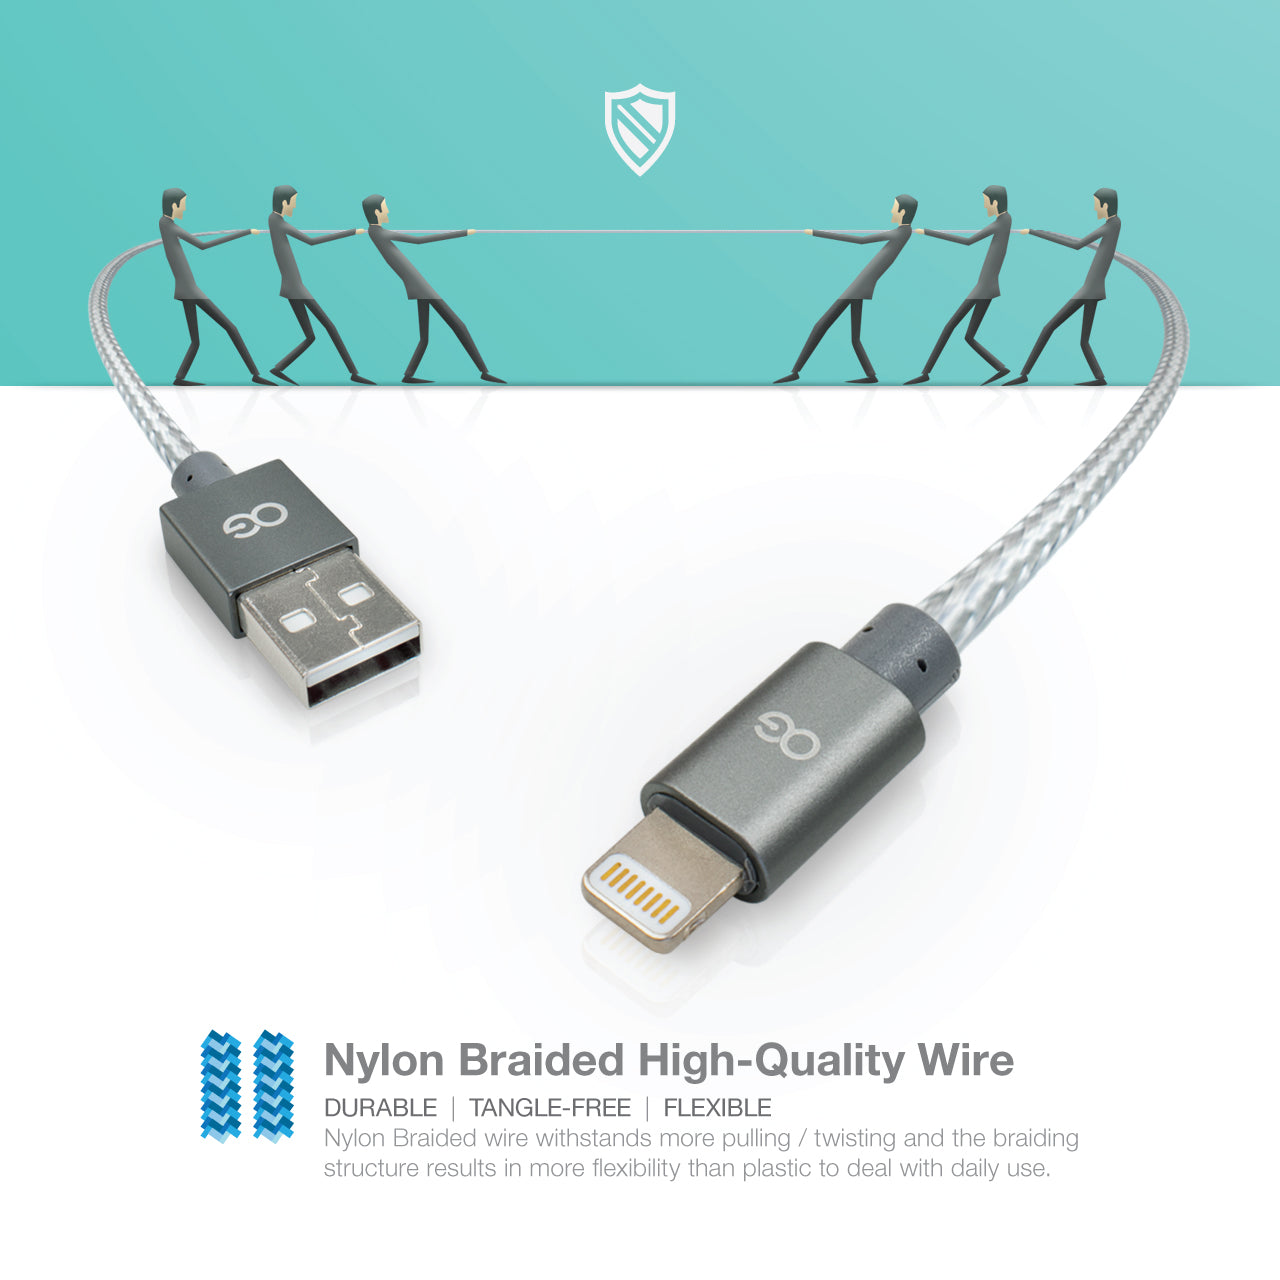 Hikvision Cable USB-C a Lightning MFi Certificado 1mt iPhone iPad iPod Carga  Rapida 3 Amp 480 Mbps 60 Watts HS-HUB-CBC2L - ETCHILE